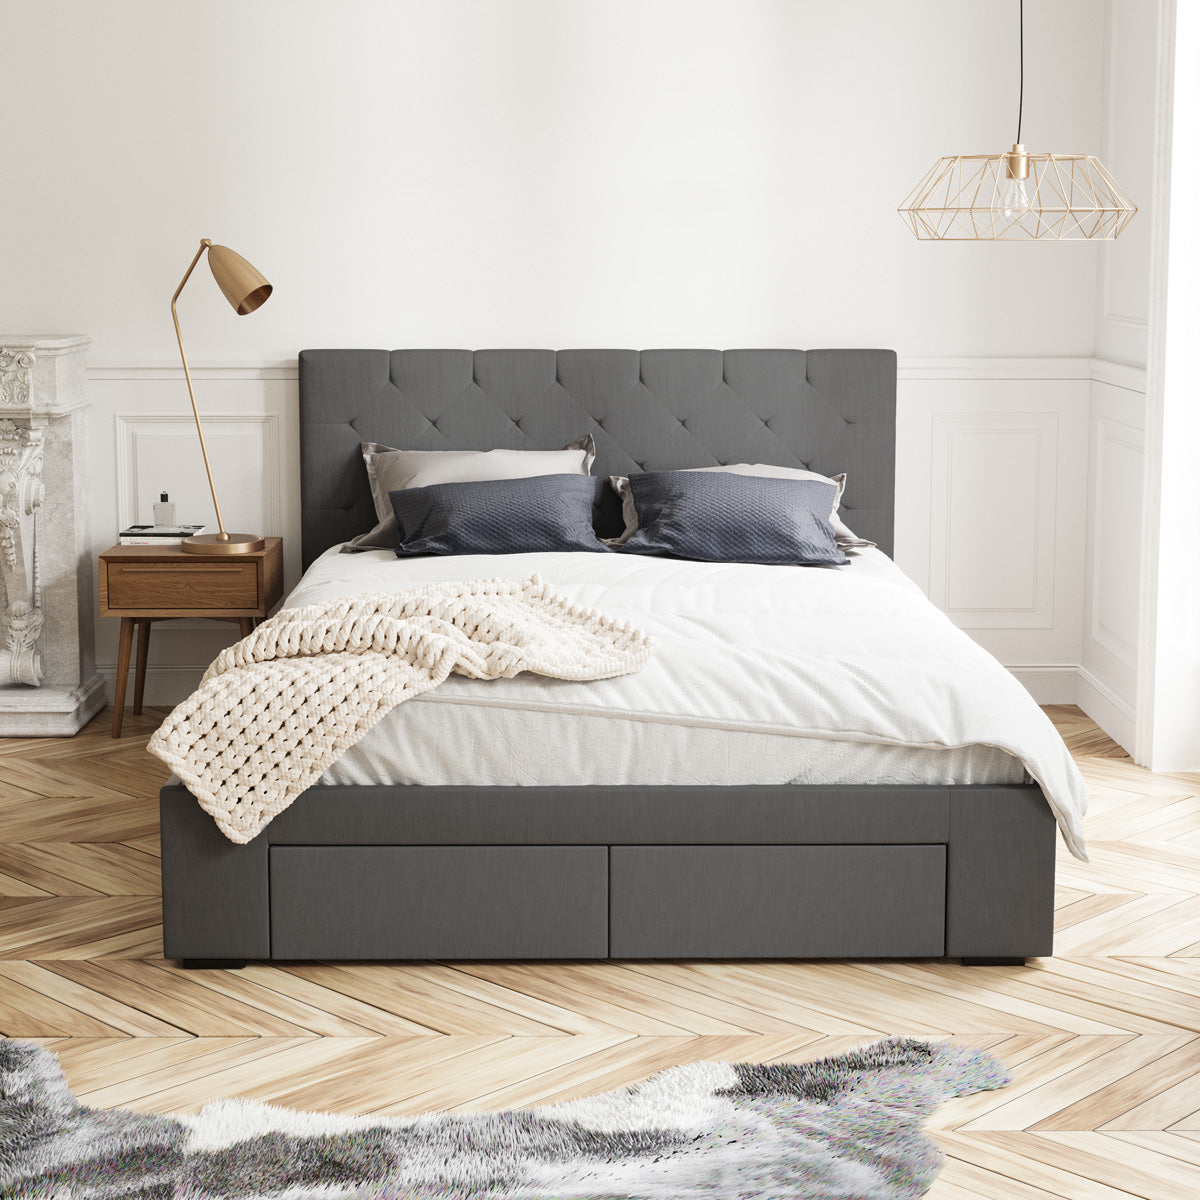 Charcoal Webster Storage Bed Frame with Aspen Bedside Tables Package